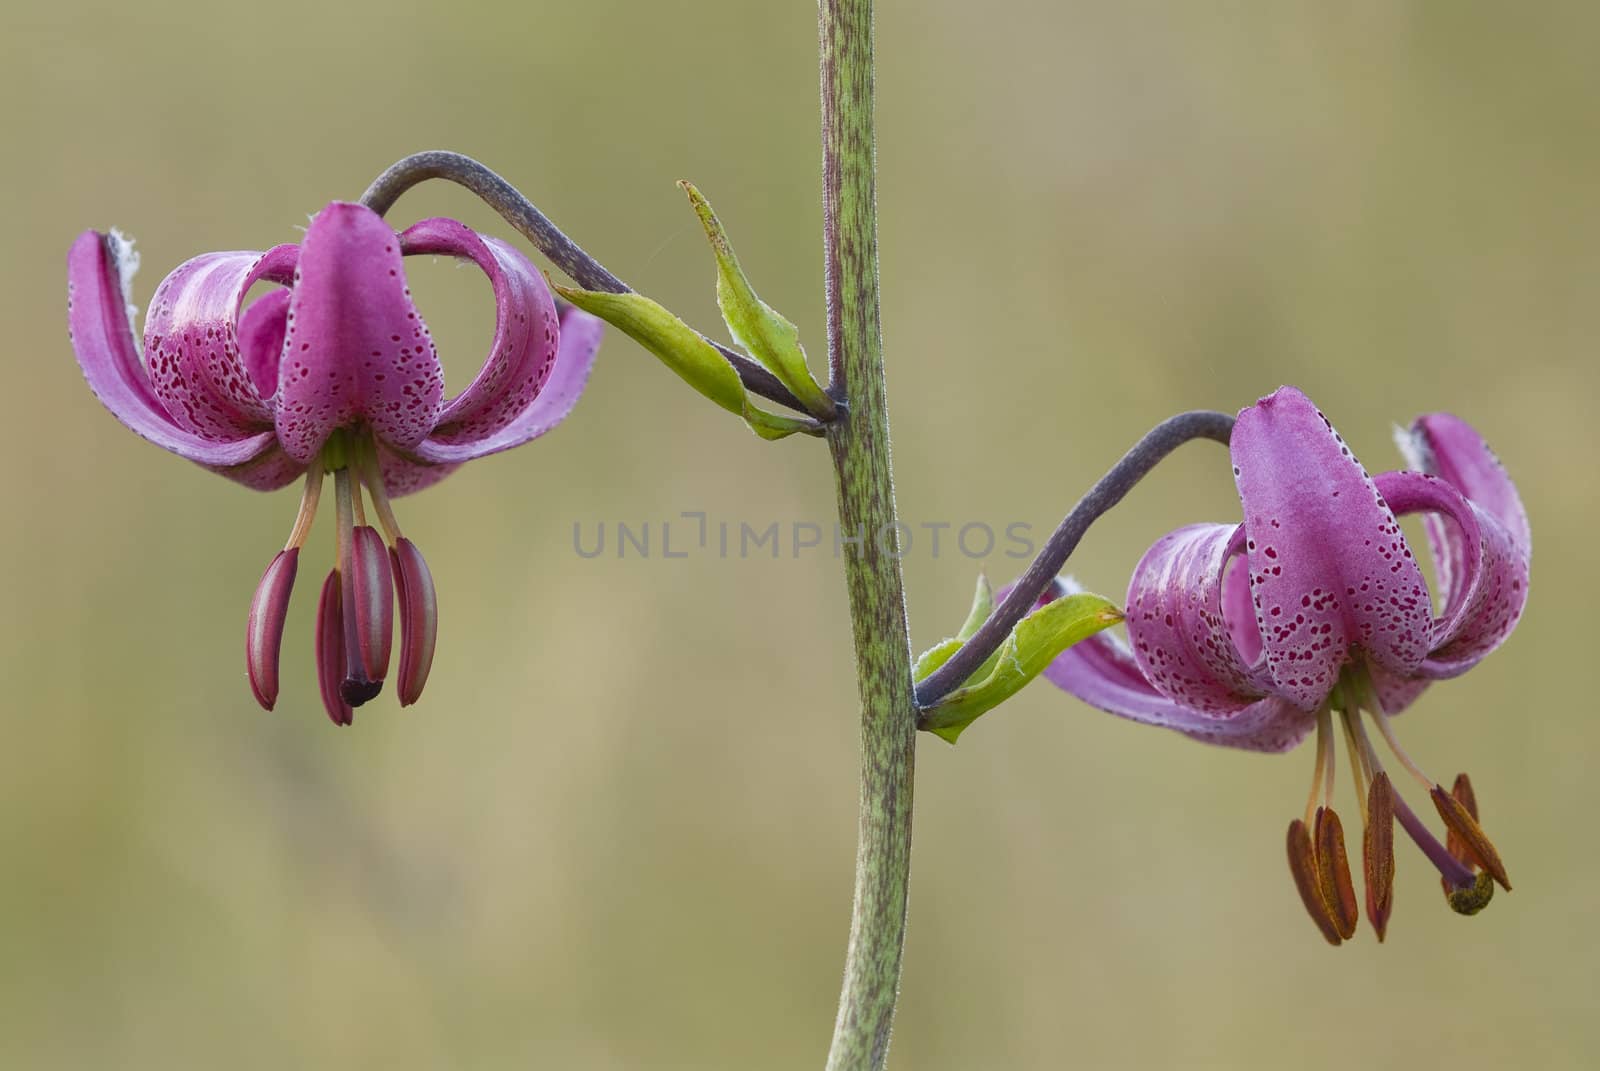 Flowers of Martagon or Turk's cap lily (Lilium martagon)